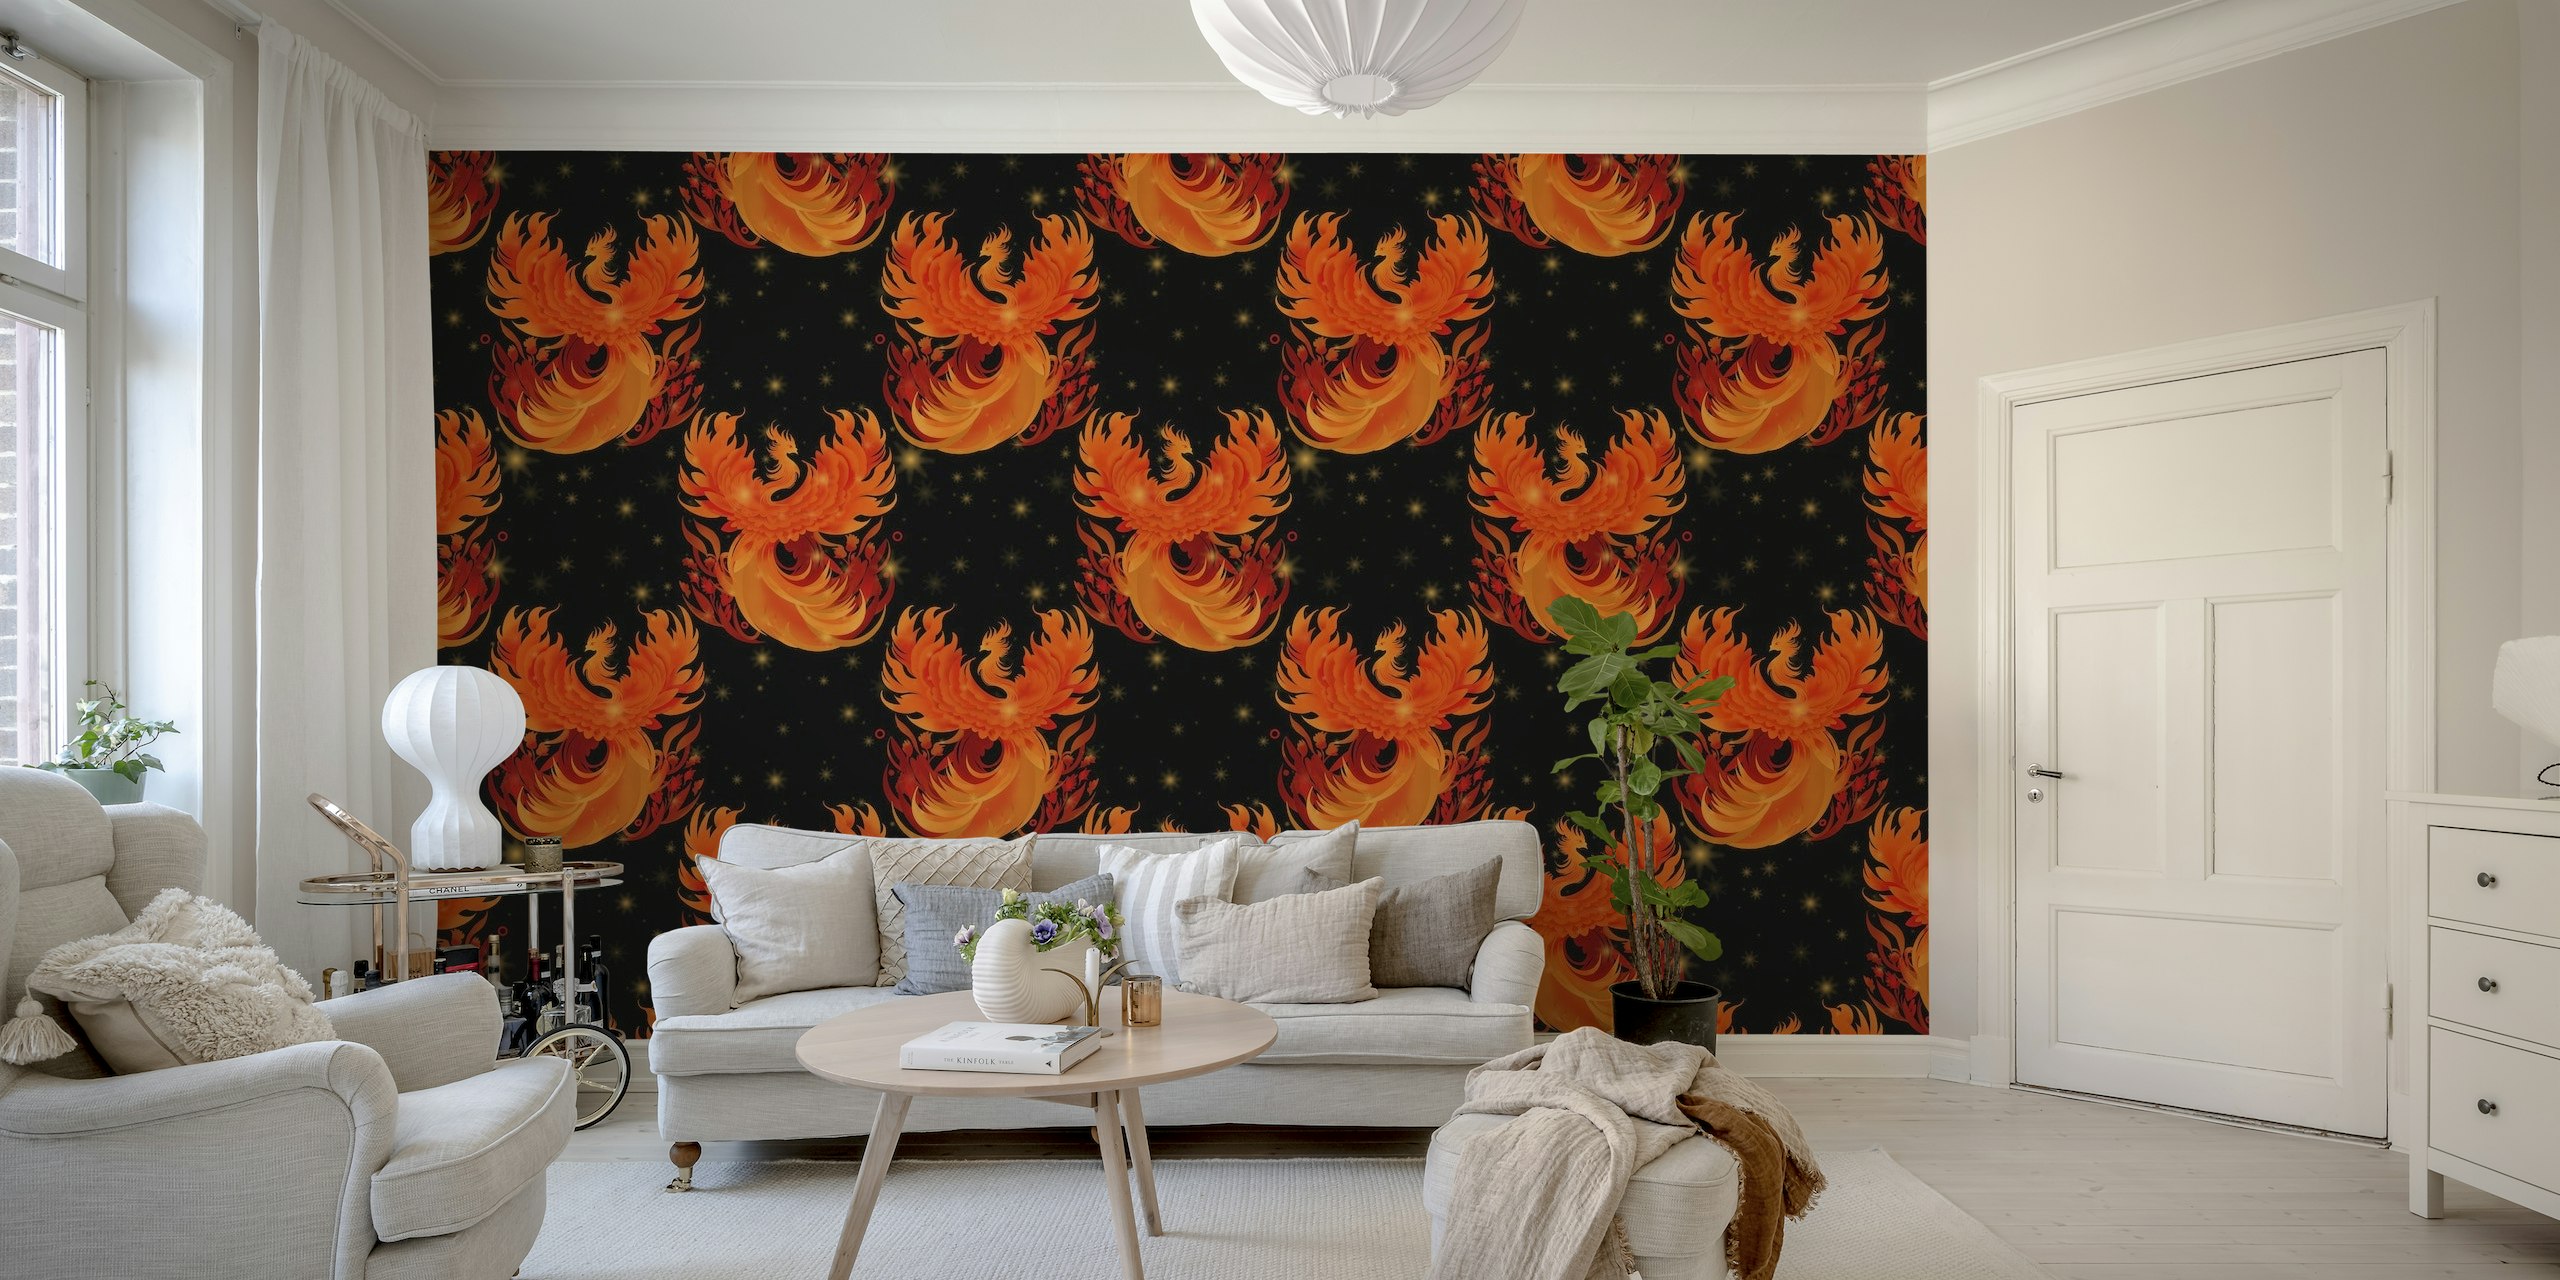 Phoenix Rising wallpaper